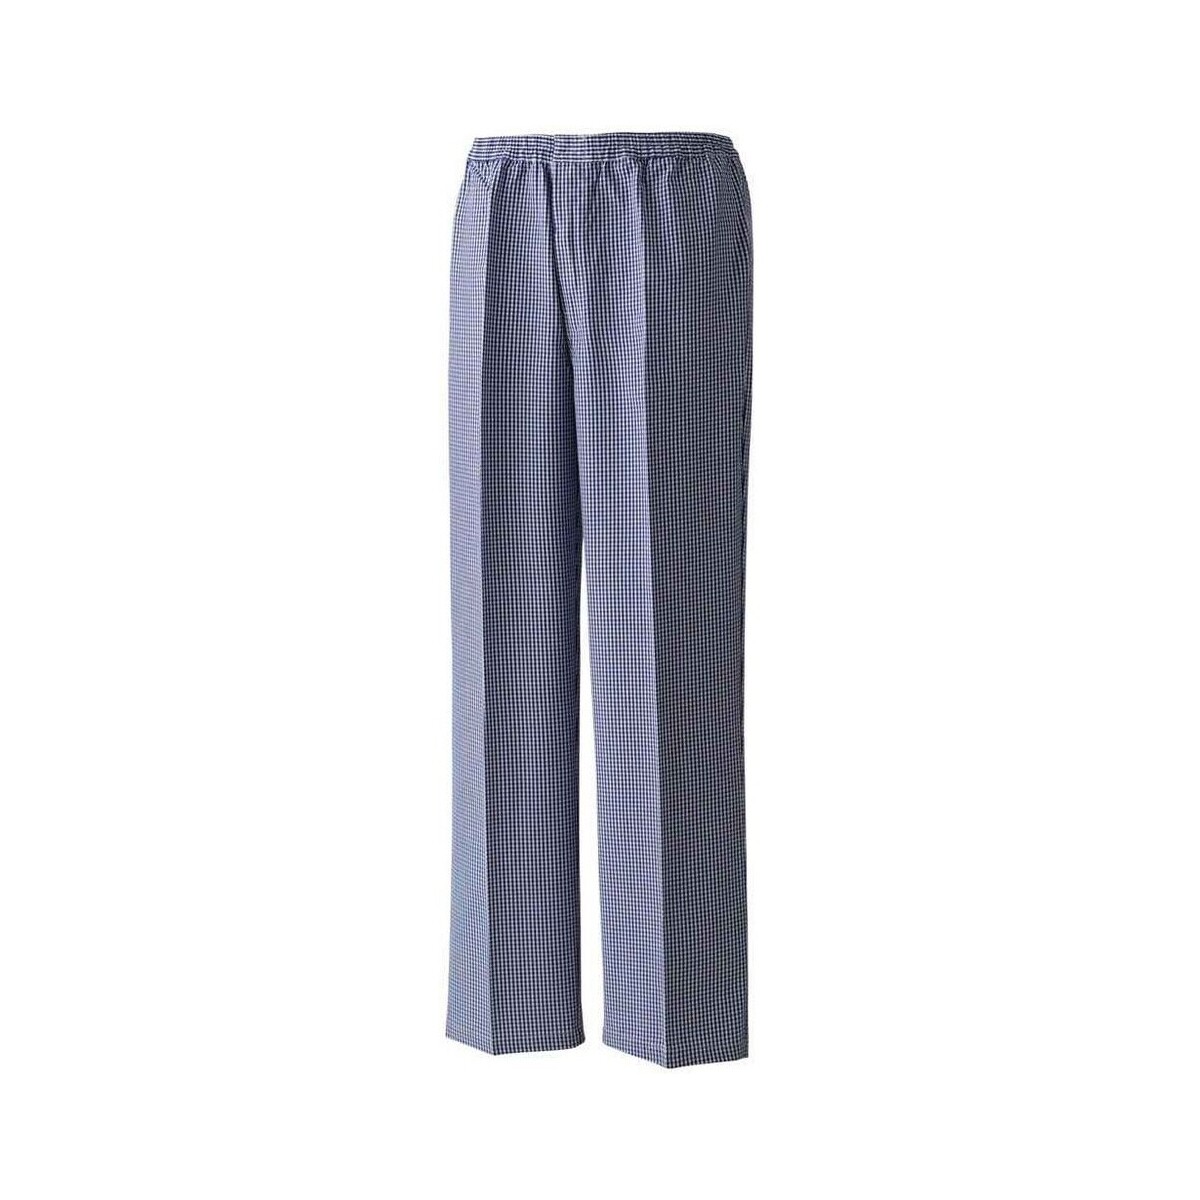 textil Pantalones Premier PR552 Blanco